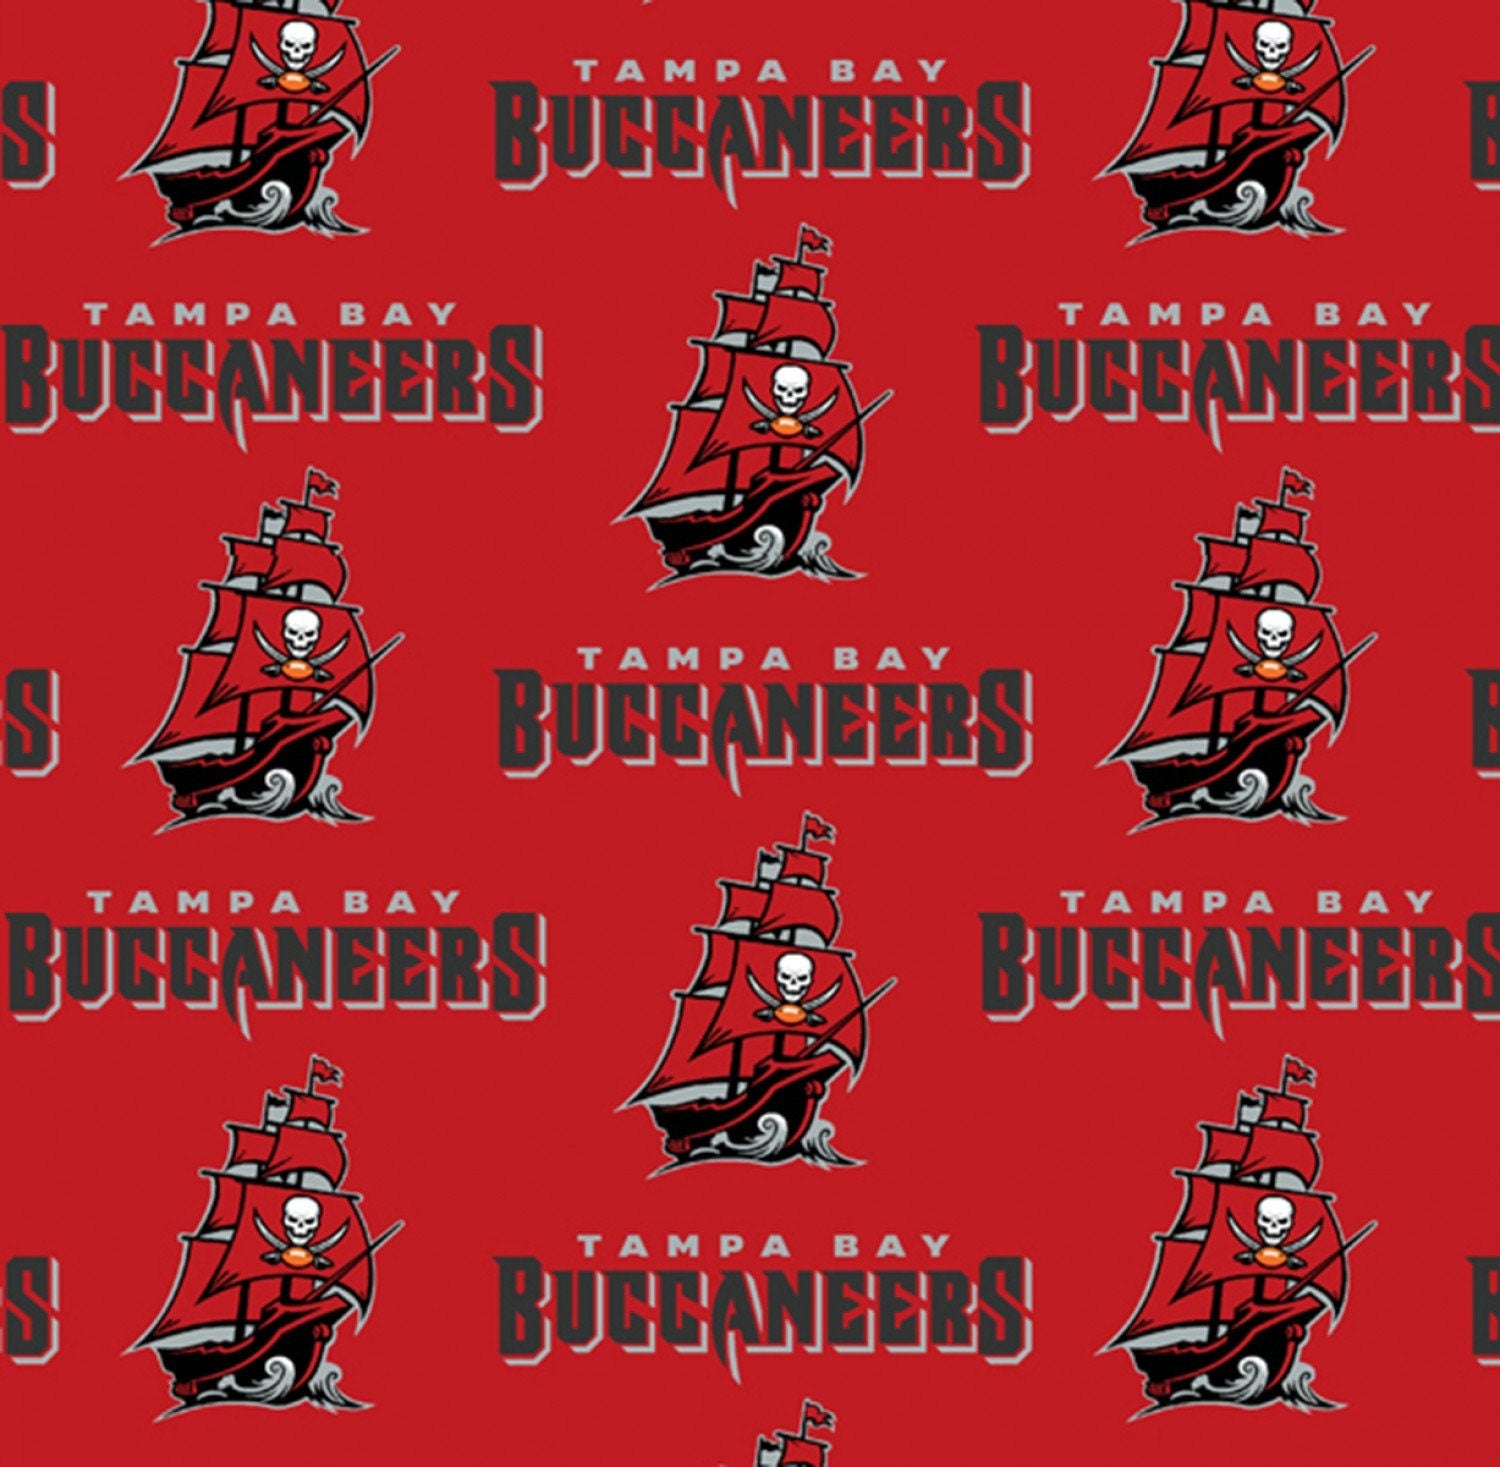 60 tampa bay buccaneers